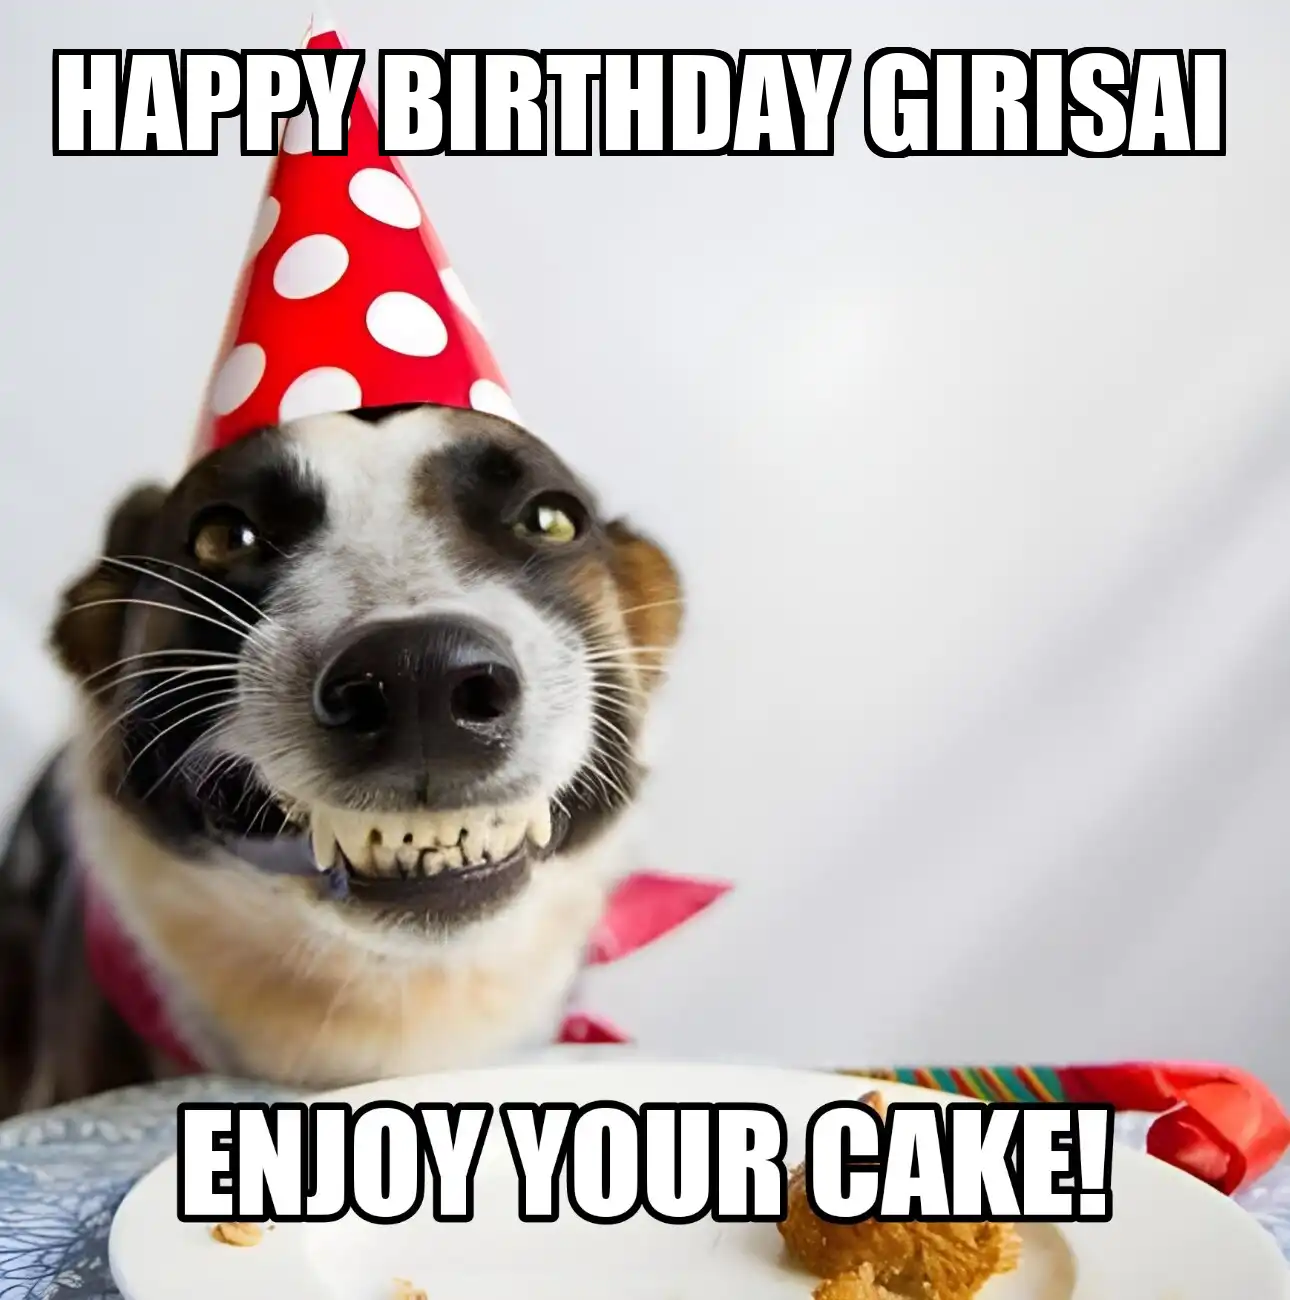 Happy Birthday Girisai Enjoy Your Cake Dog Meme